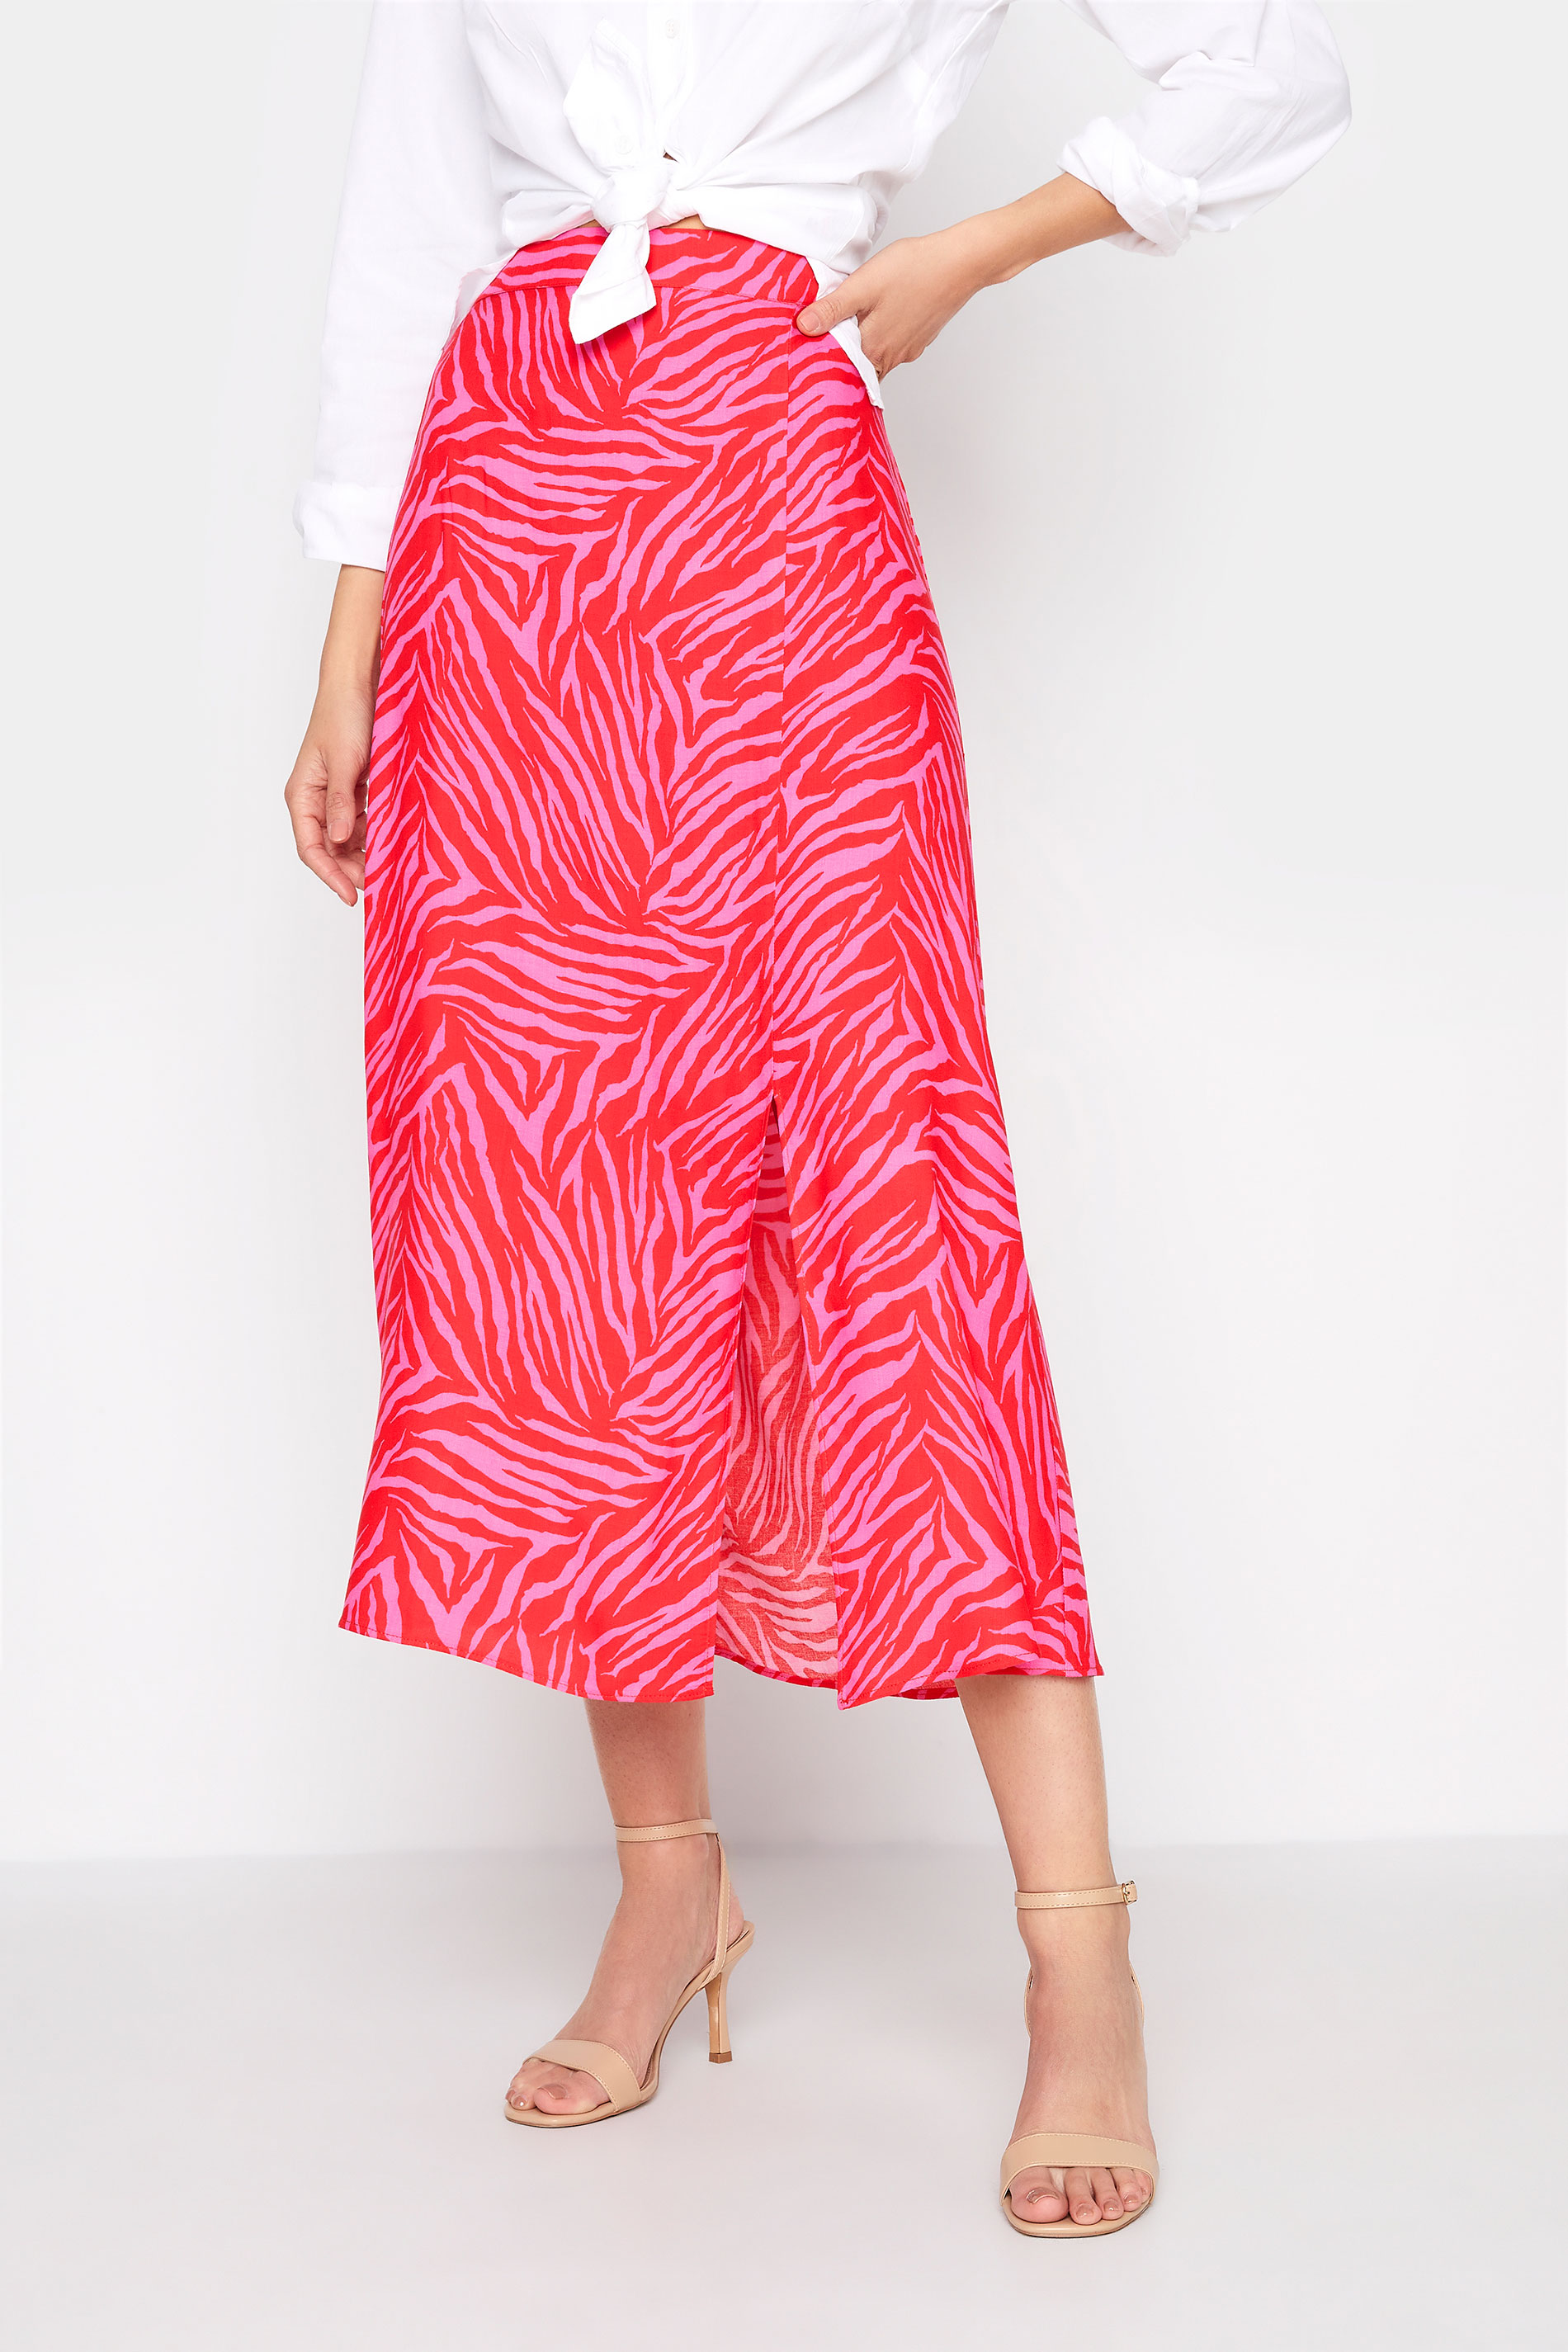 Tall Women's LTS Pink Zebra Print Midi Skirt | Long Tall Sally 1